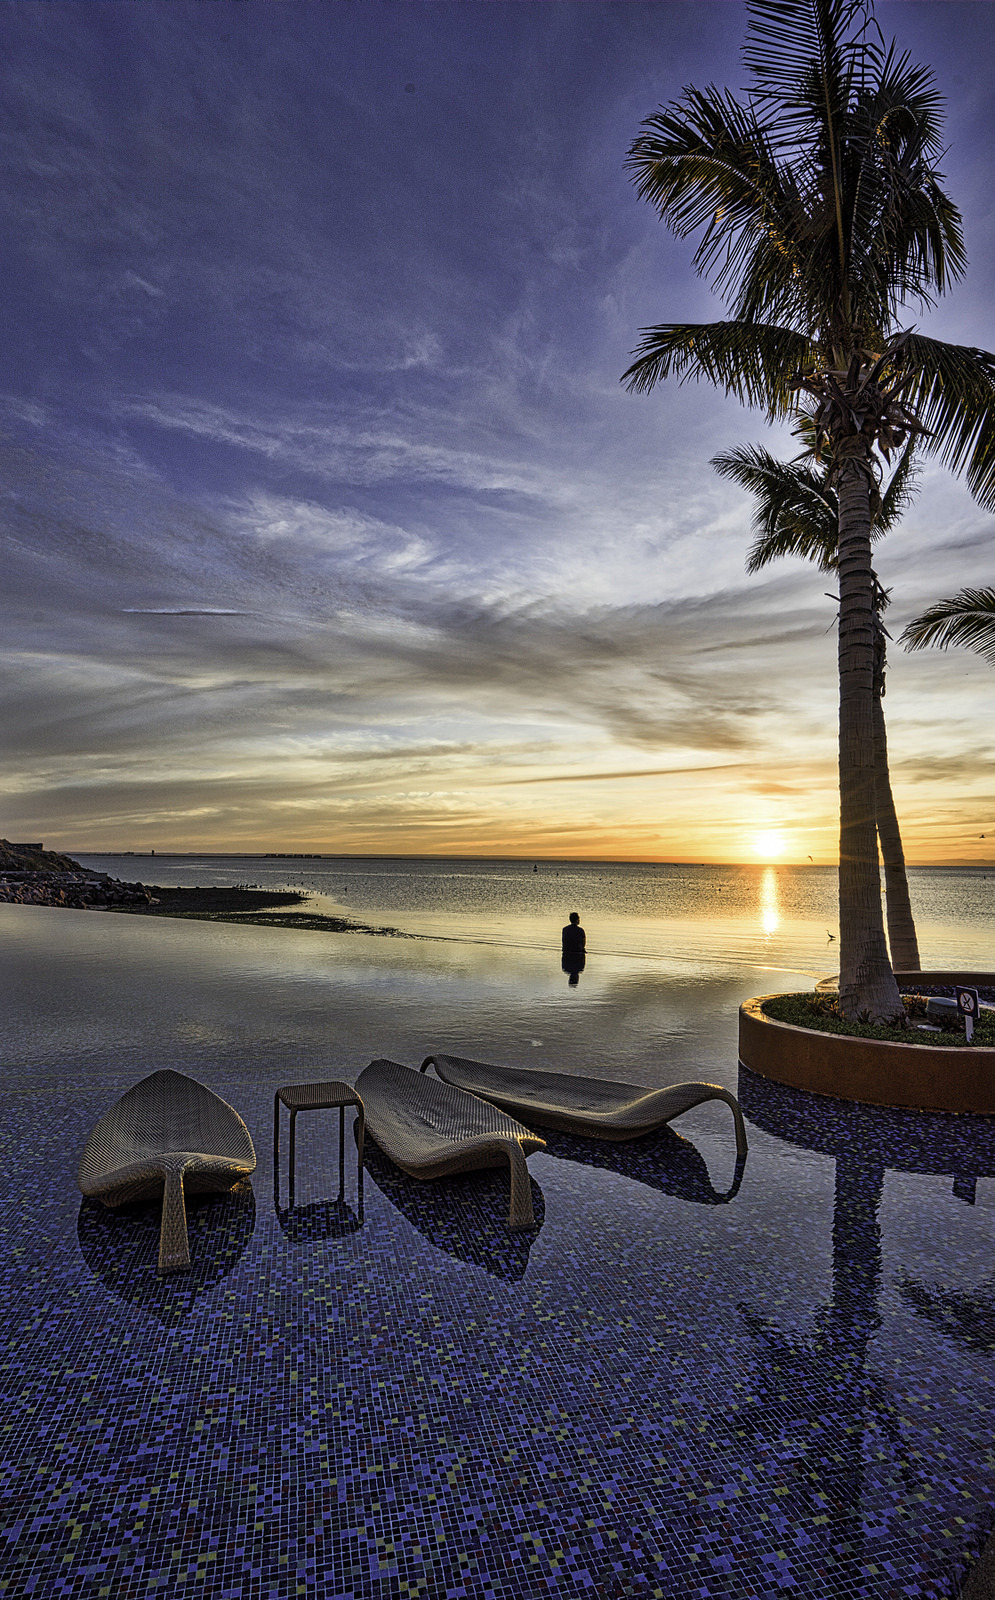 Reflections of Infinity Pool, Costa Baja / Mexico